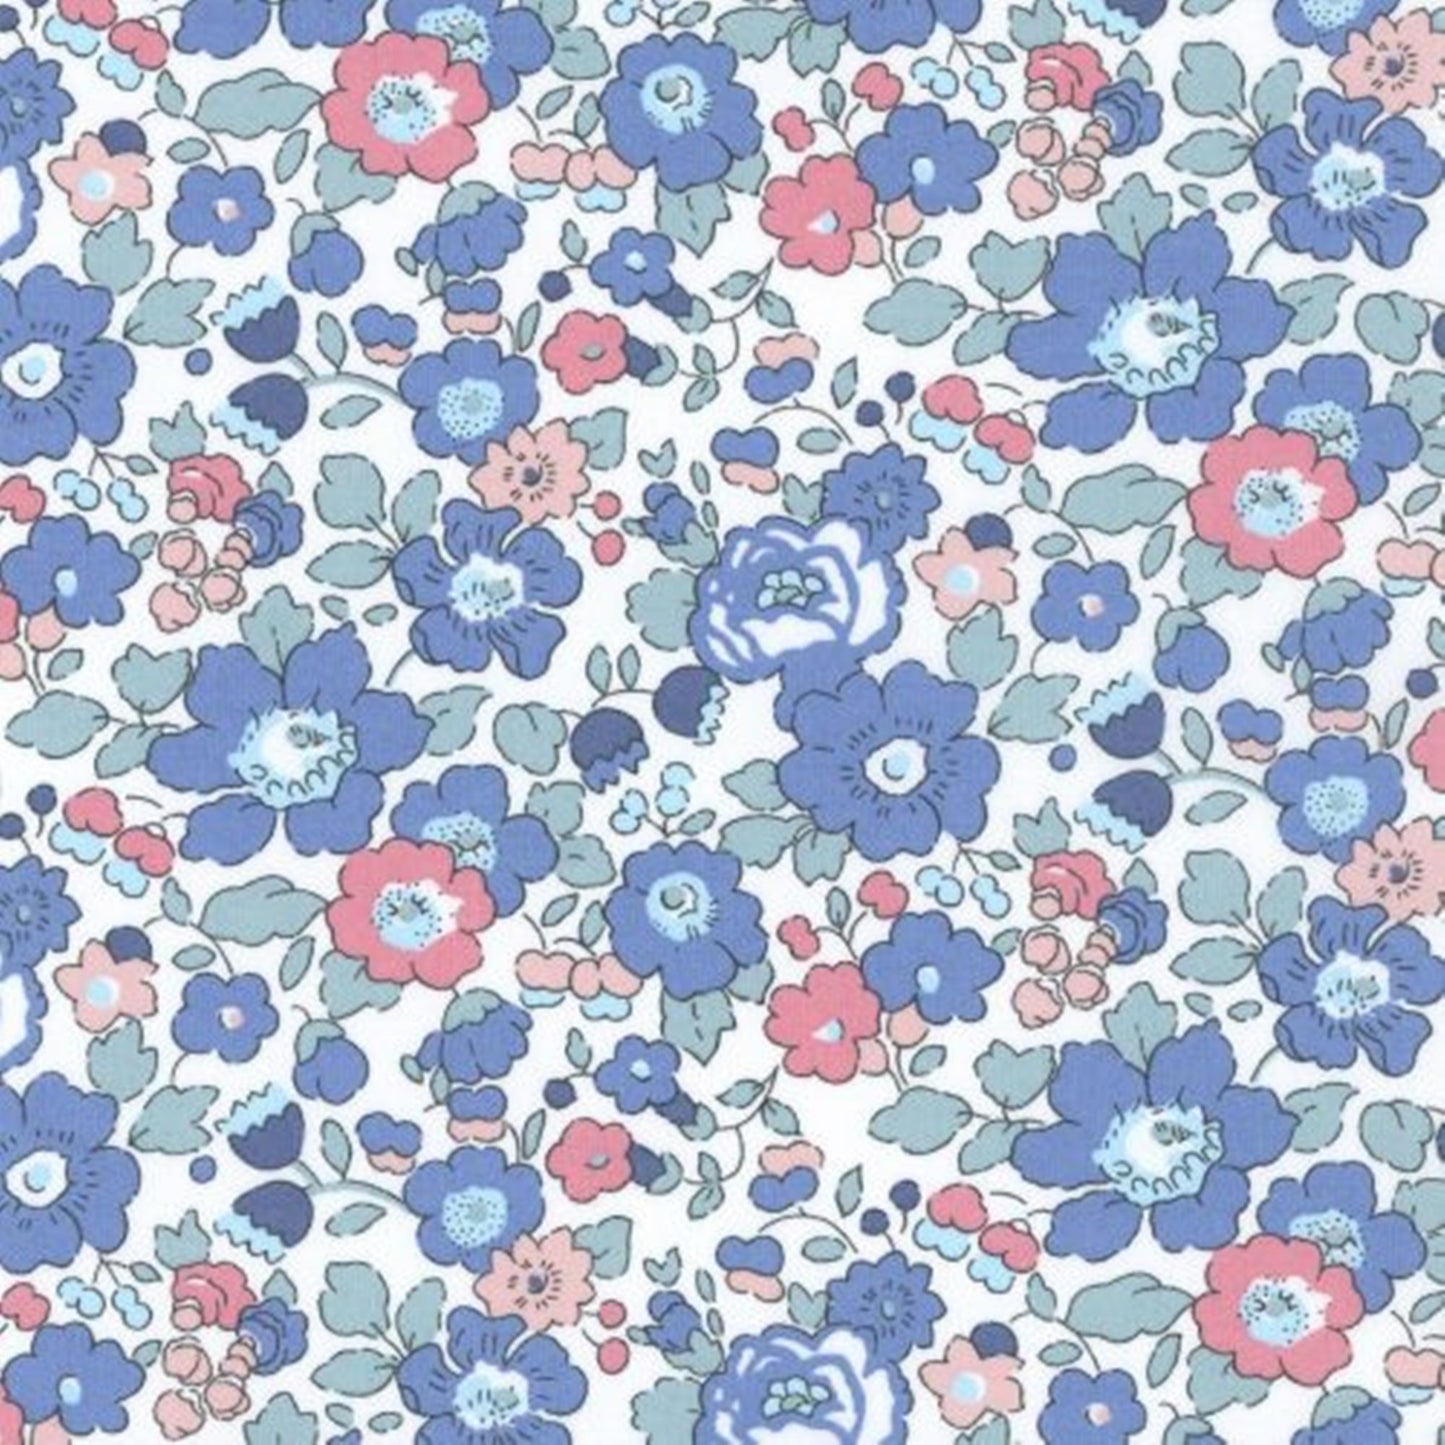 Liberty Tana Lawn Fat Quarter Betsy B blue pink floral Fat Quarter cotton fabric